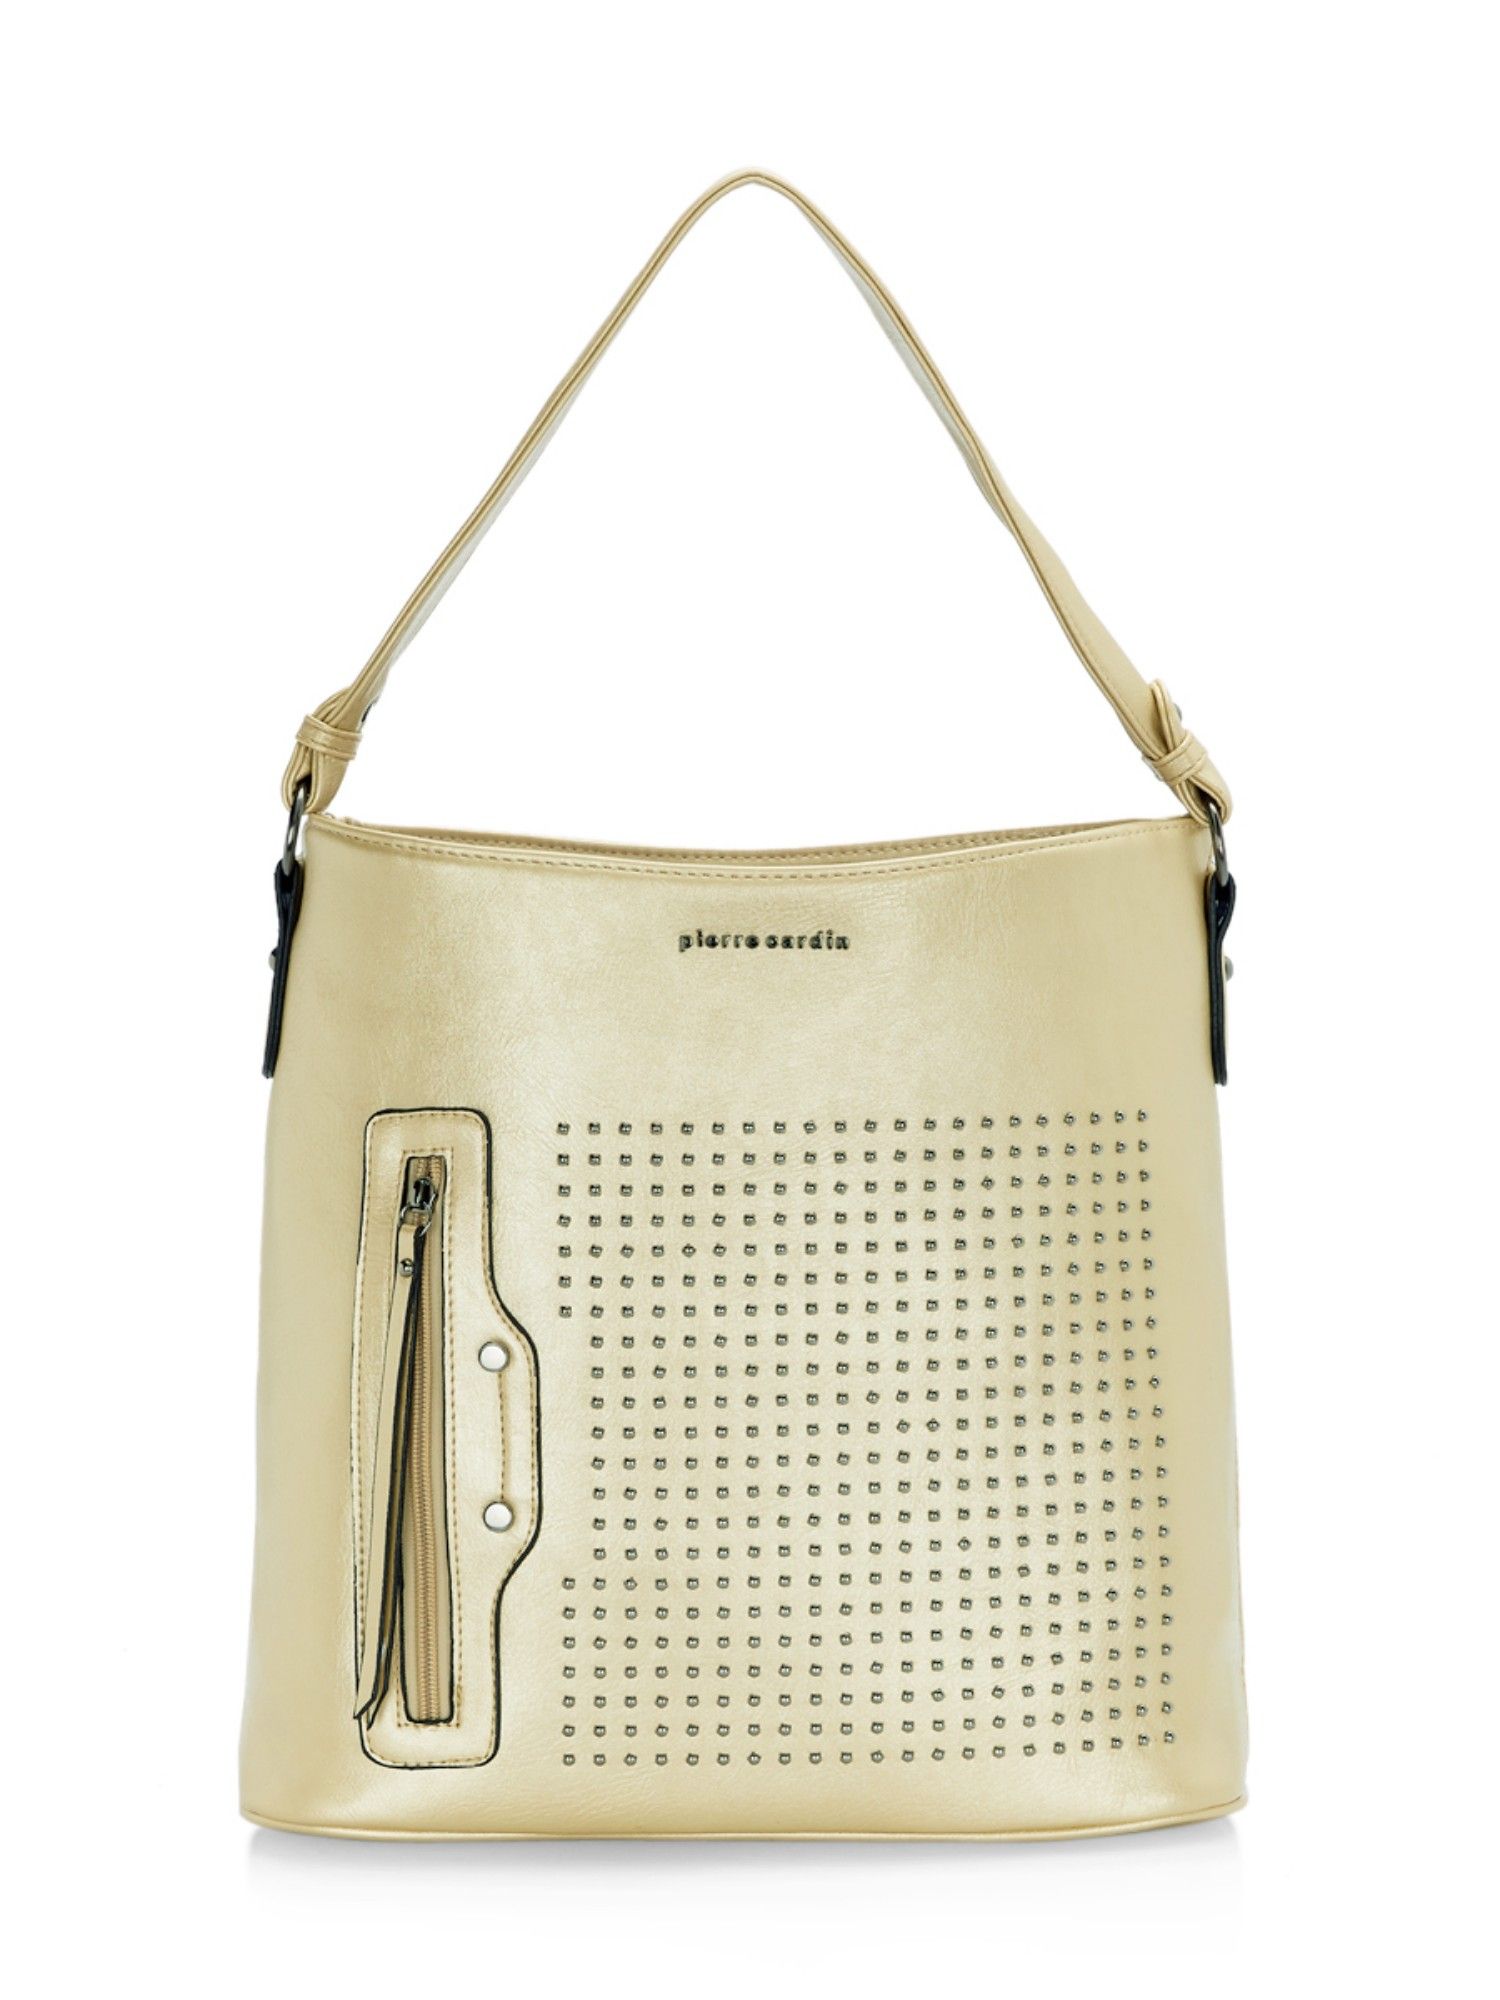 Pierre Cardin Bags Beige Embellished Hobo Handbag